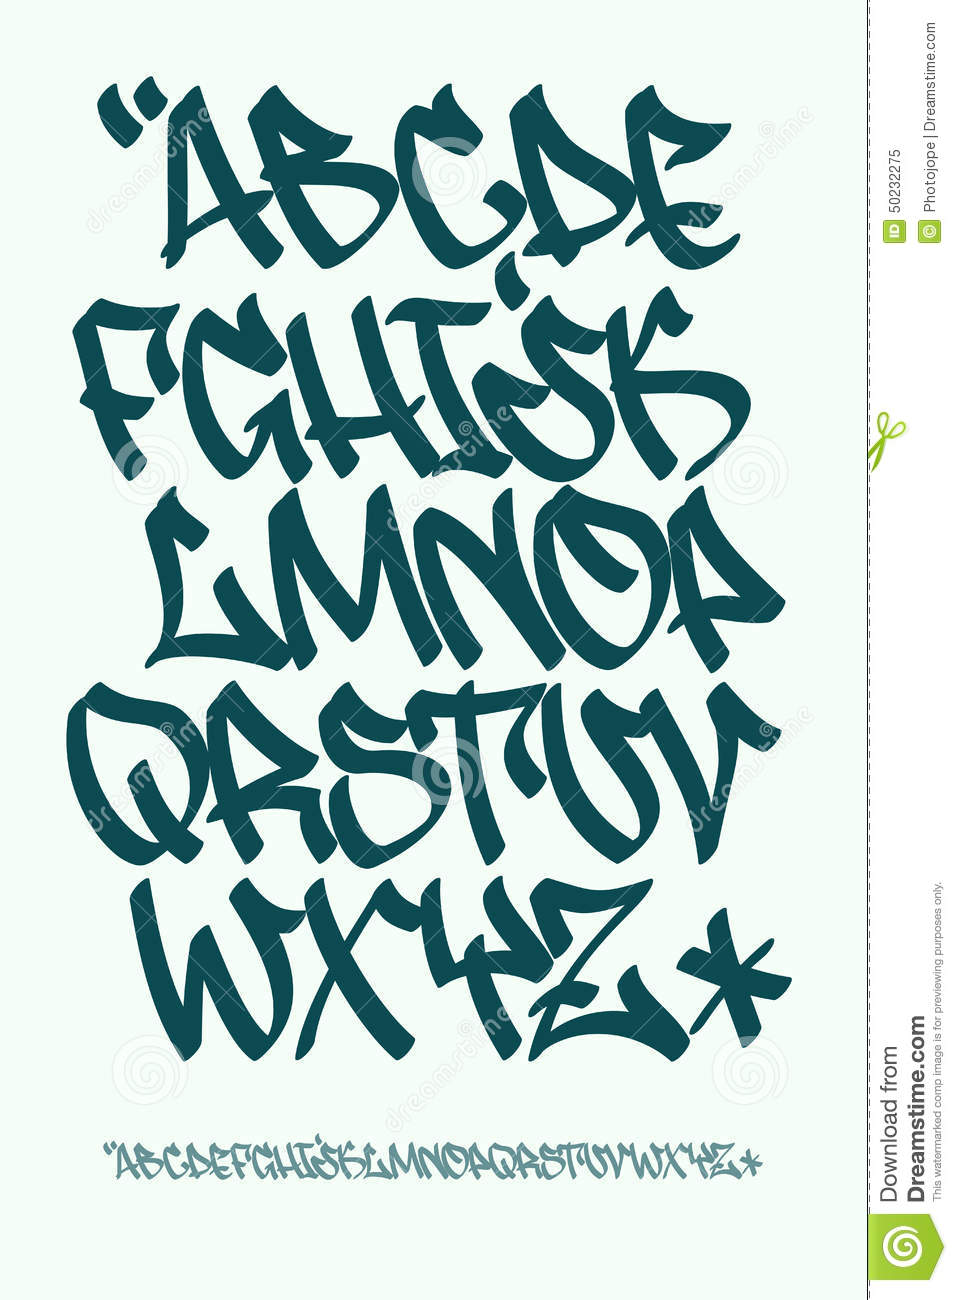 12-capital-graffiti-alphabet-fonts-images-cool-graffiti-alphabet-bubble-letters-graffiti